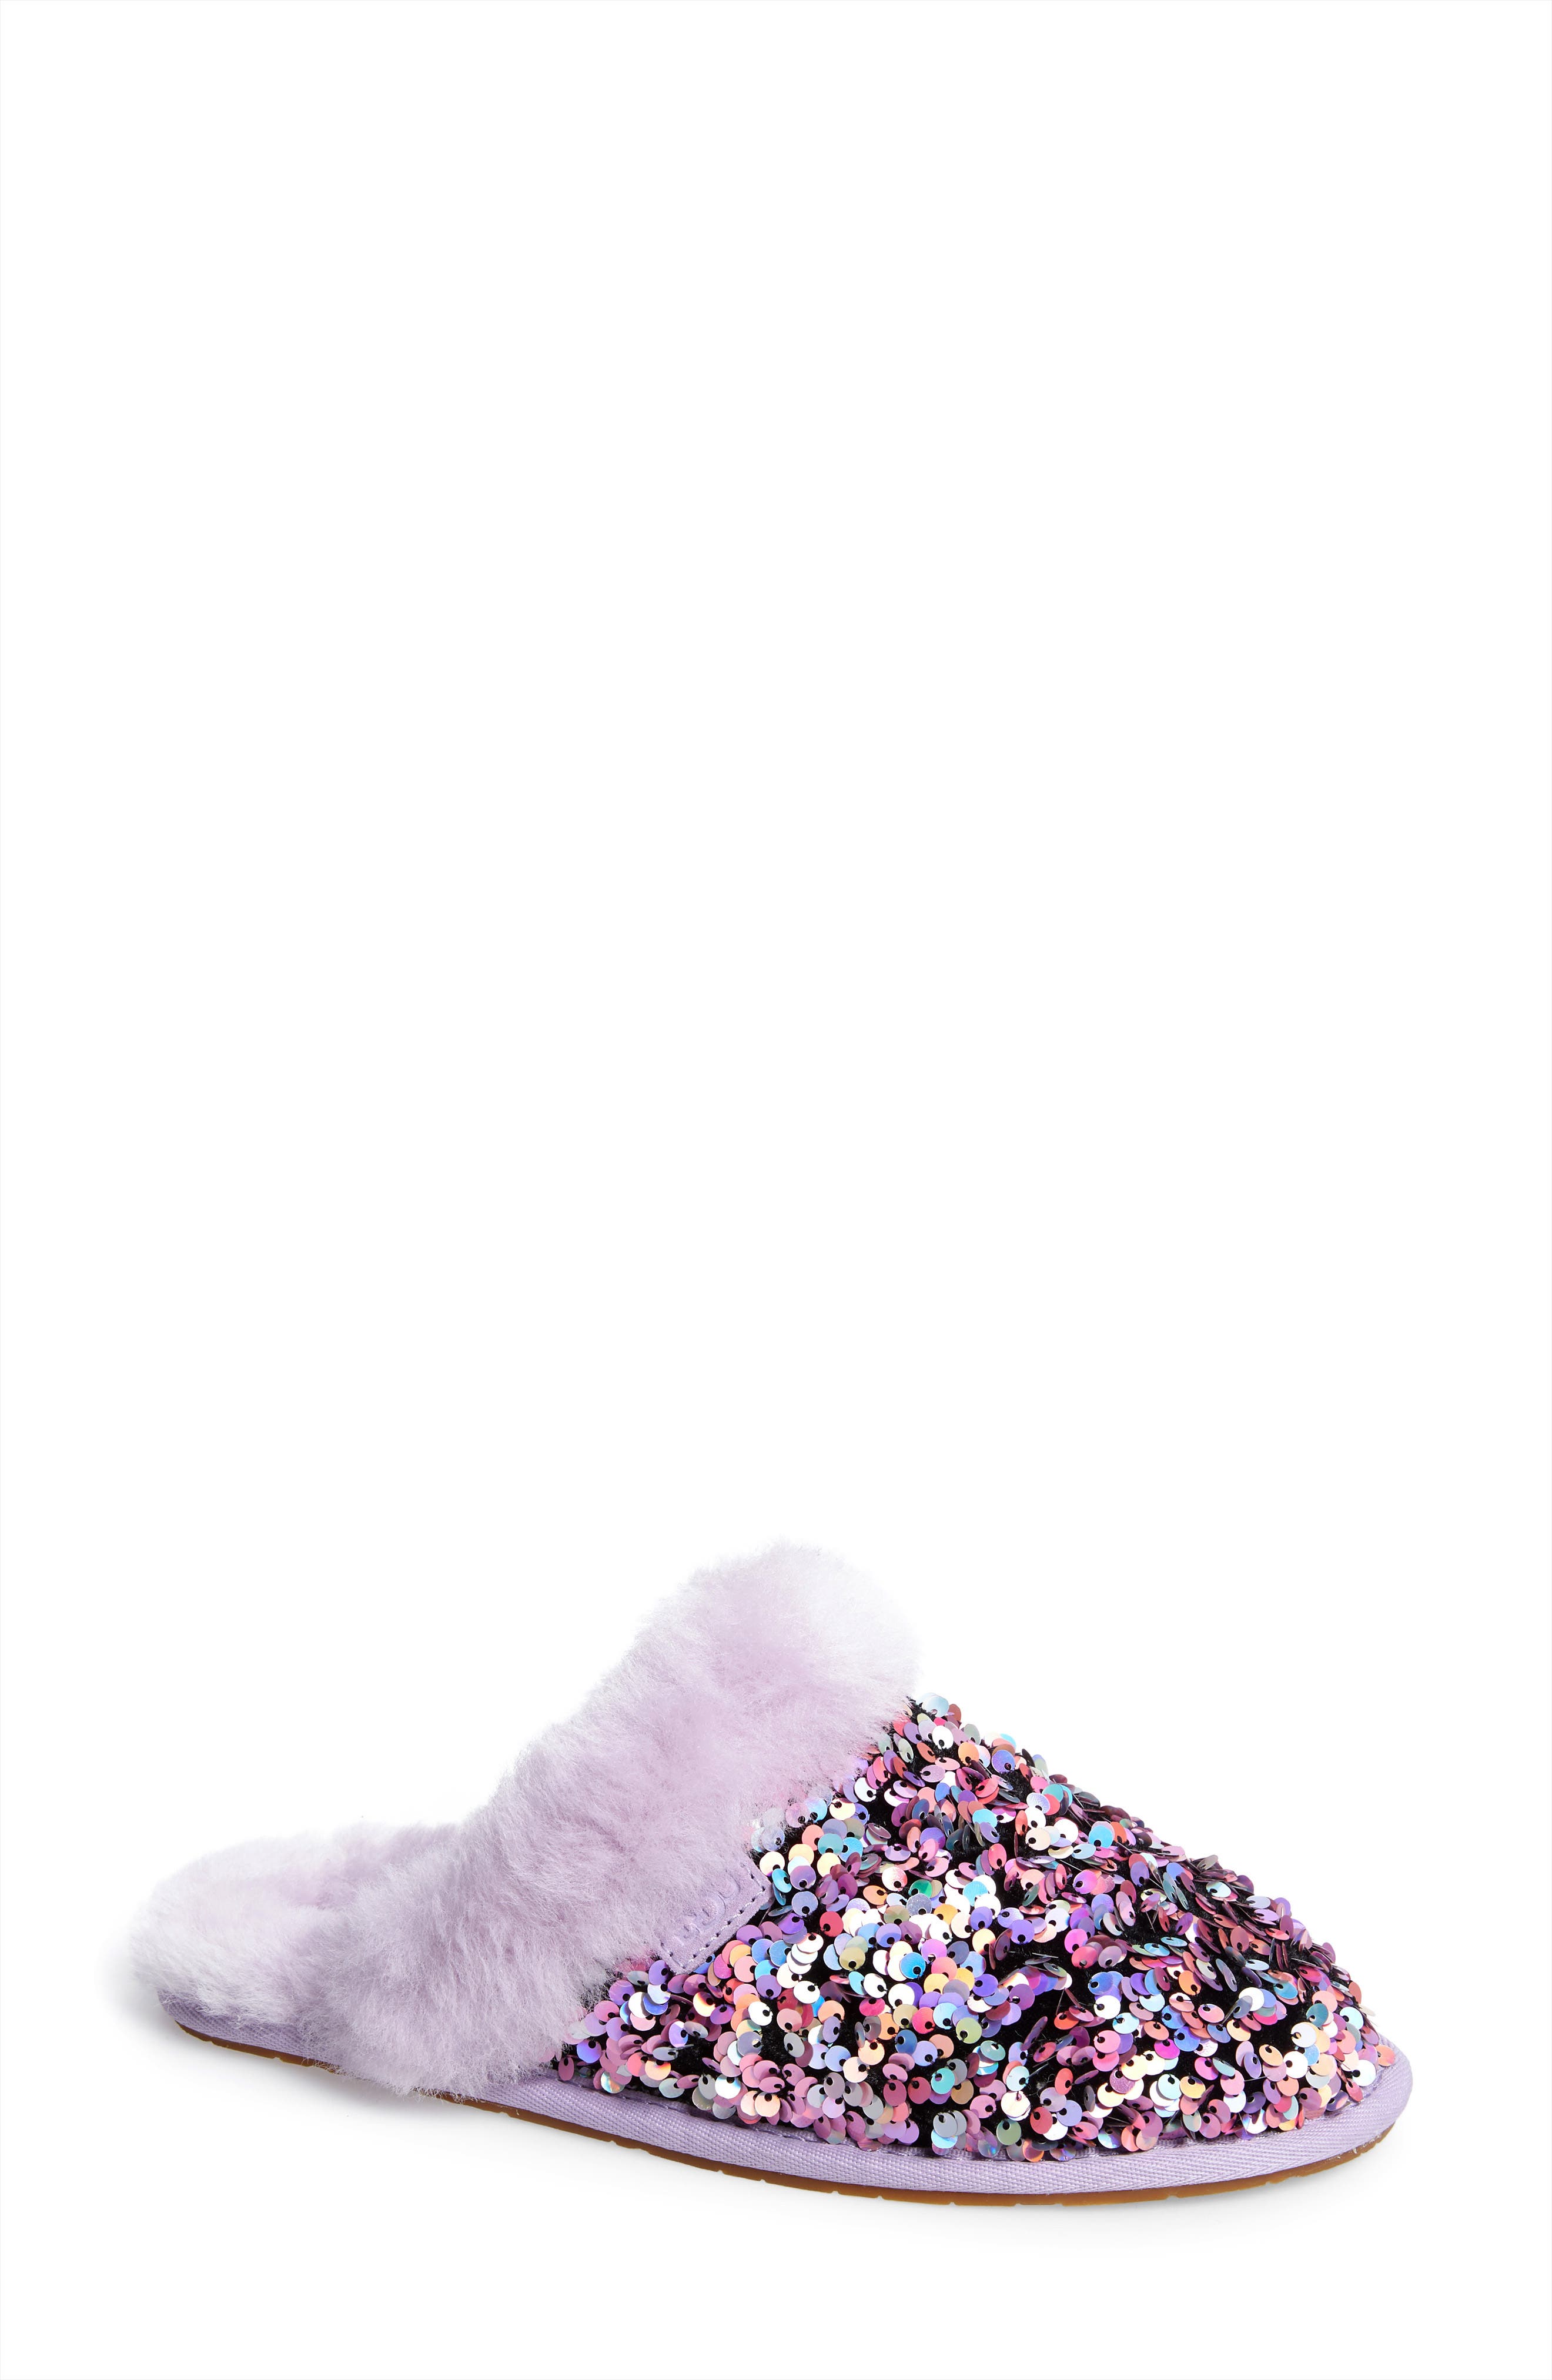 sparkle ugg slippers